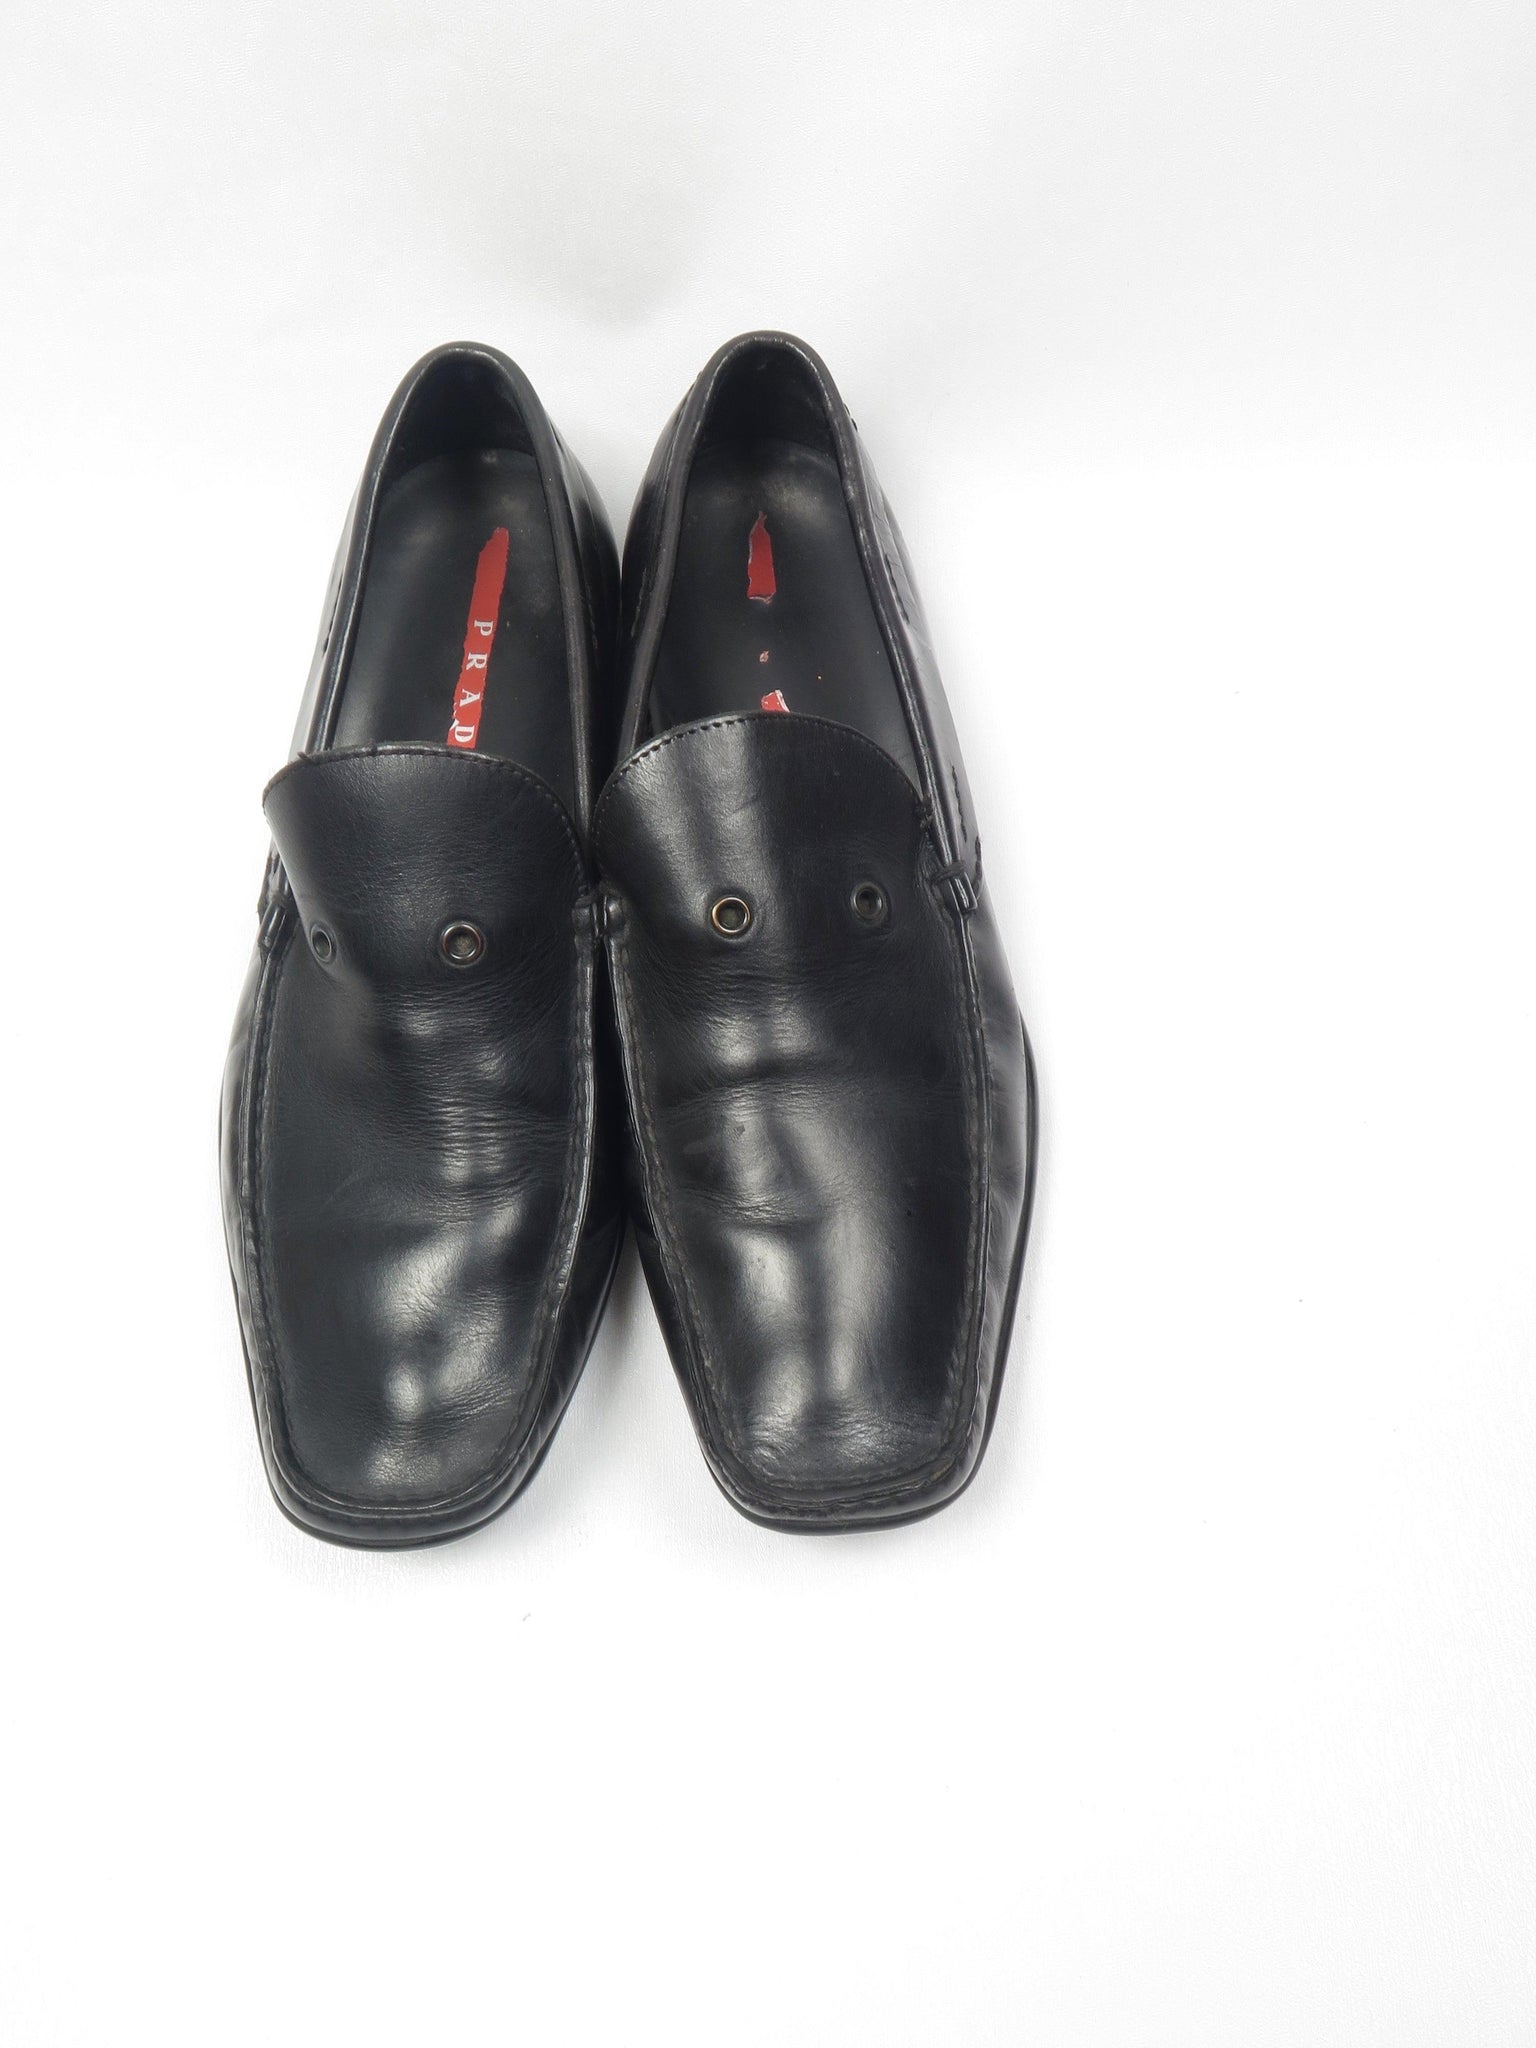 Men’s Leather Prada Loafers 9 UK 42 Eu - The Harlequin